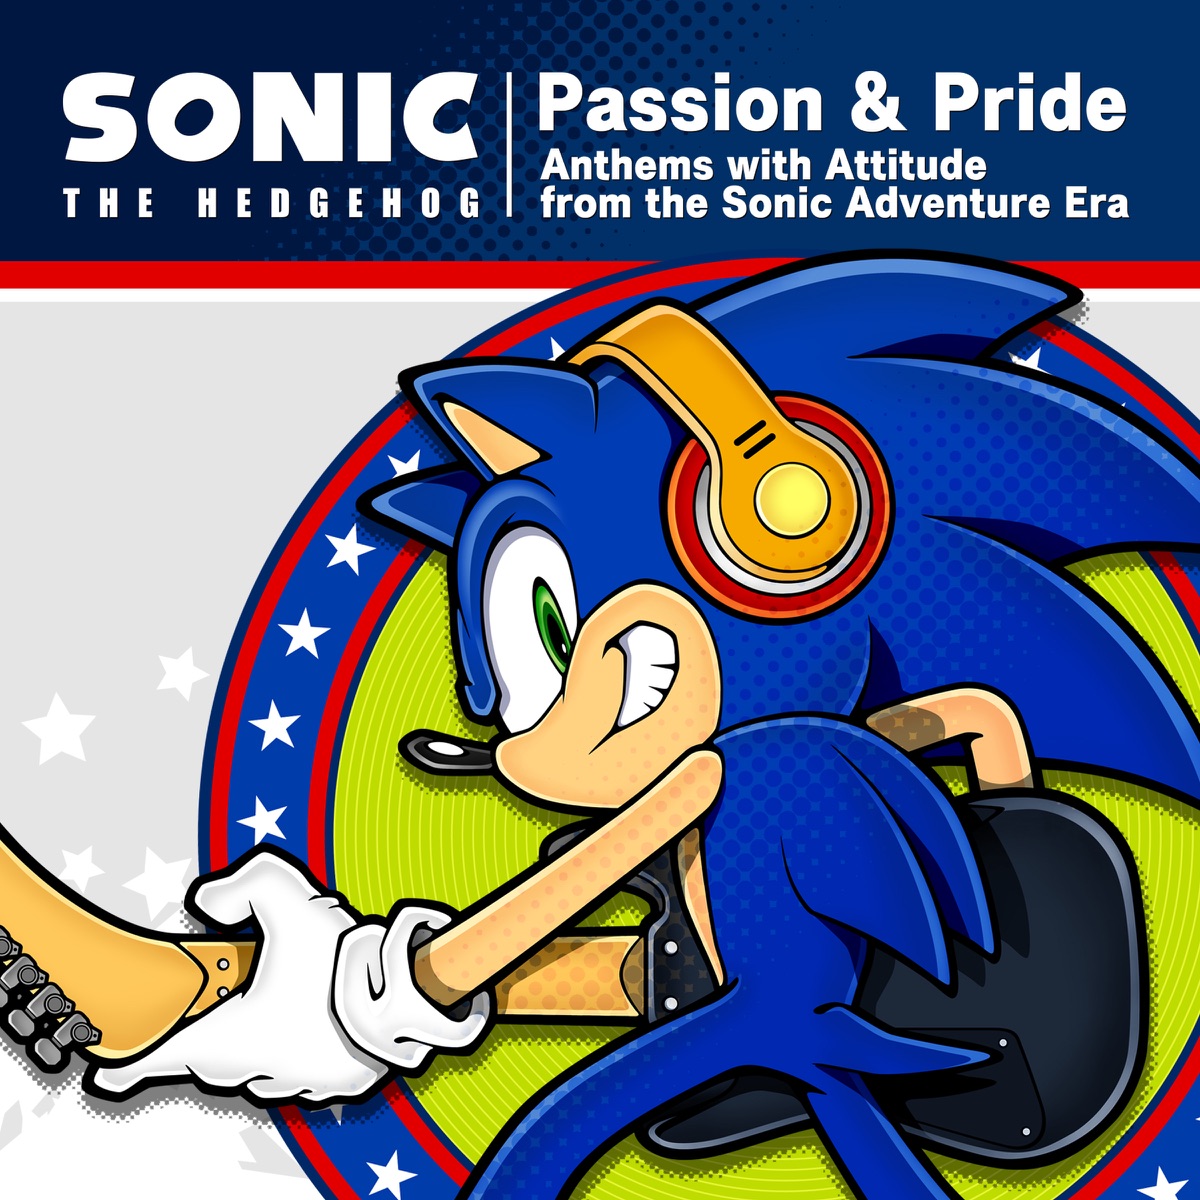  Sonic Adventure Original Soundtrack vol.2 : SONIC ADVENTURE:  Música Digital